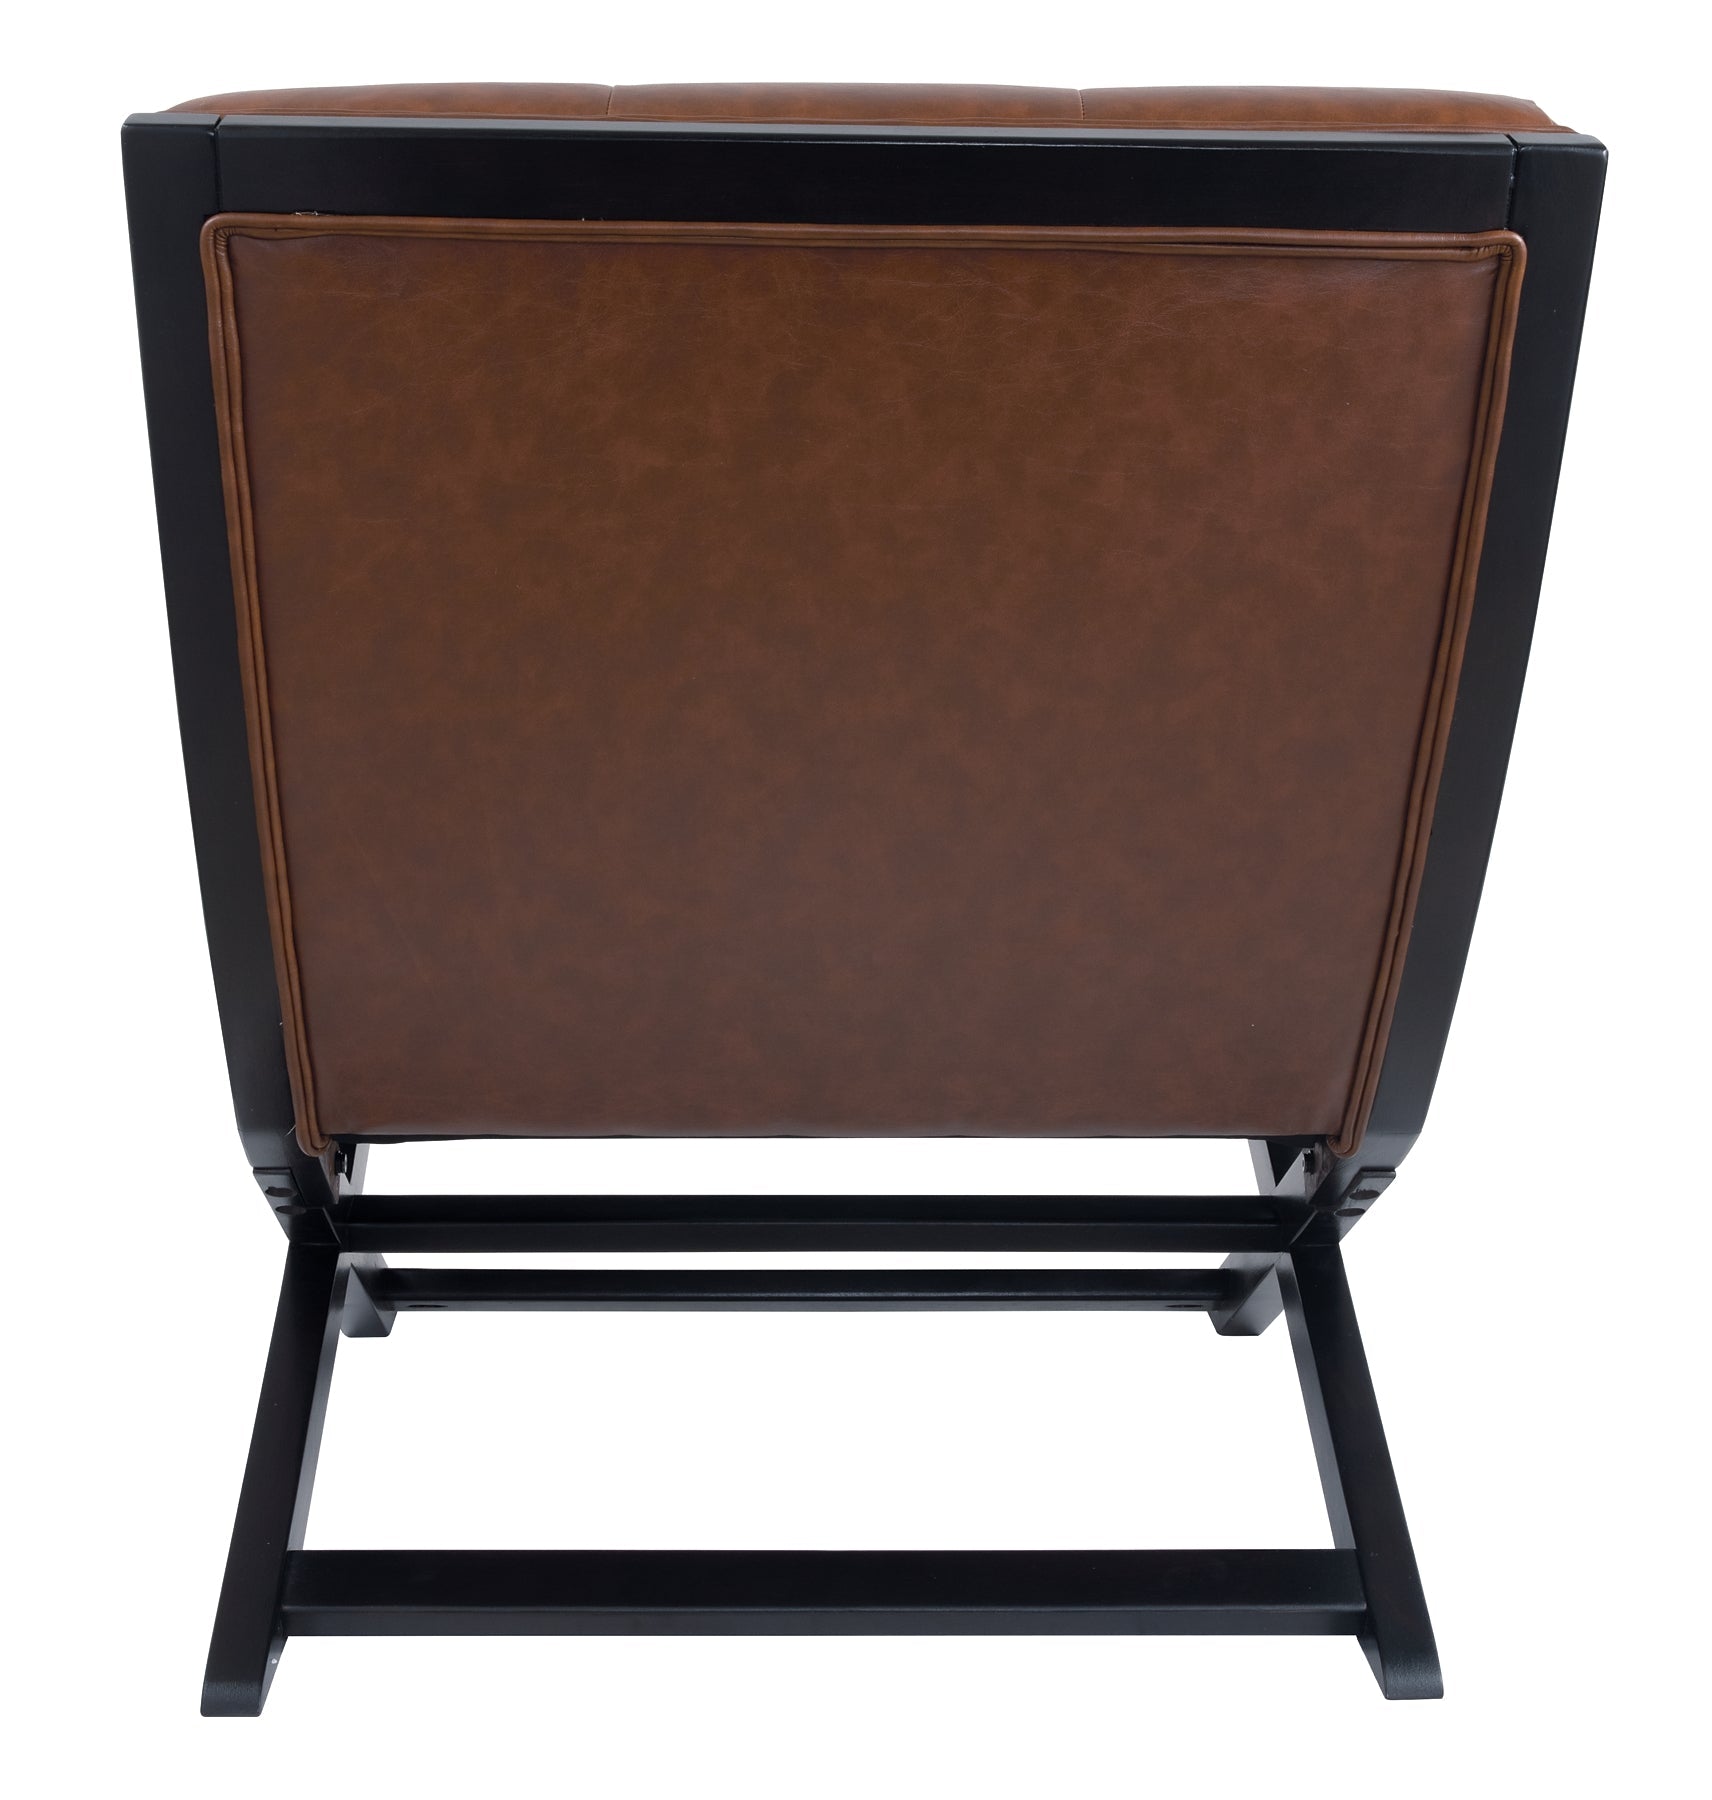 Sidewinder Accent Chair at Cloud 9 Mattress & Furniture furniture, home furnishing, home decor